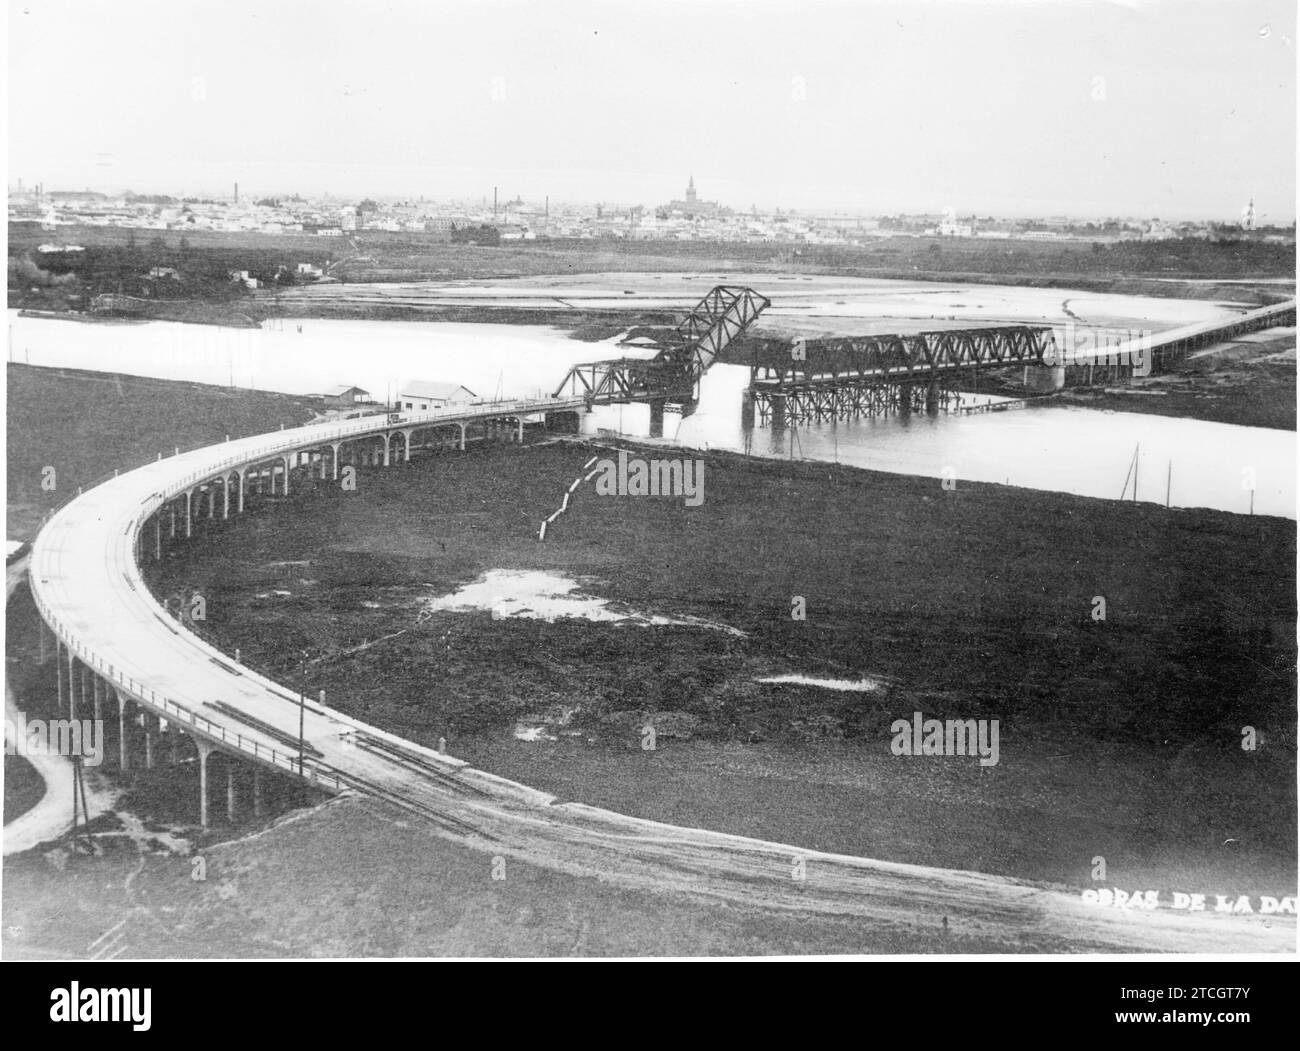 12/31/1931. Dock Works. Bridge and viaduct of San Juan - Approximate date. Credit: Album / Archivo ABC Stock Photo